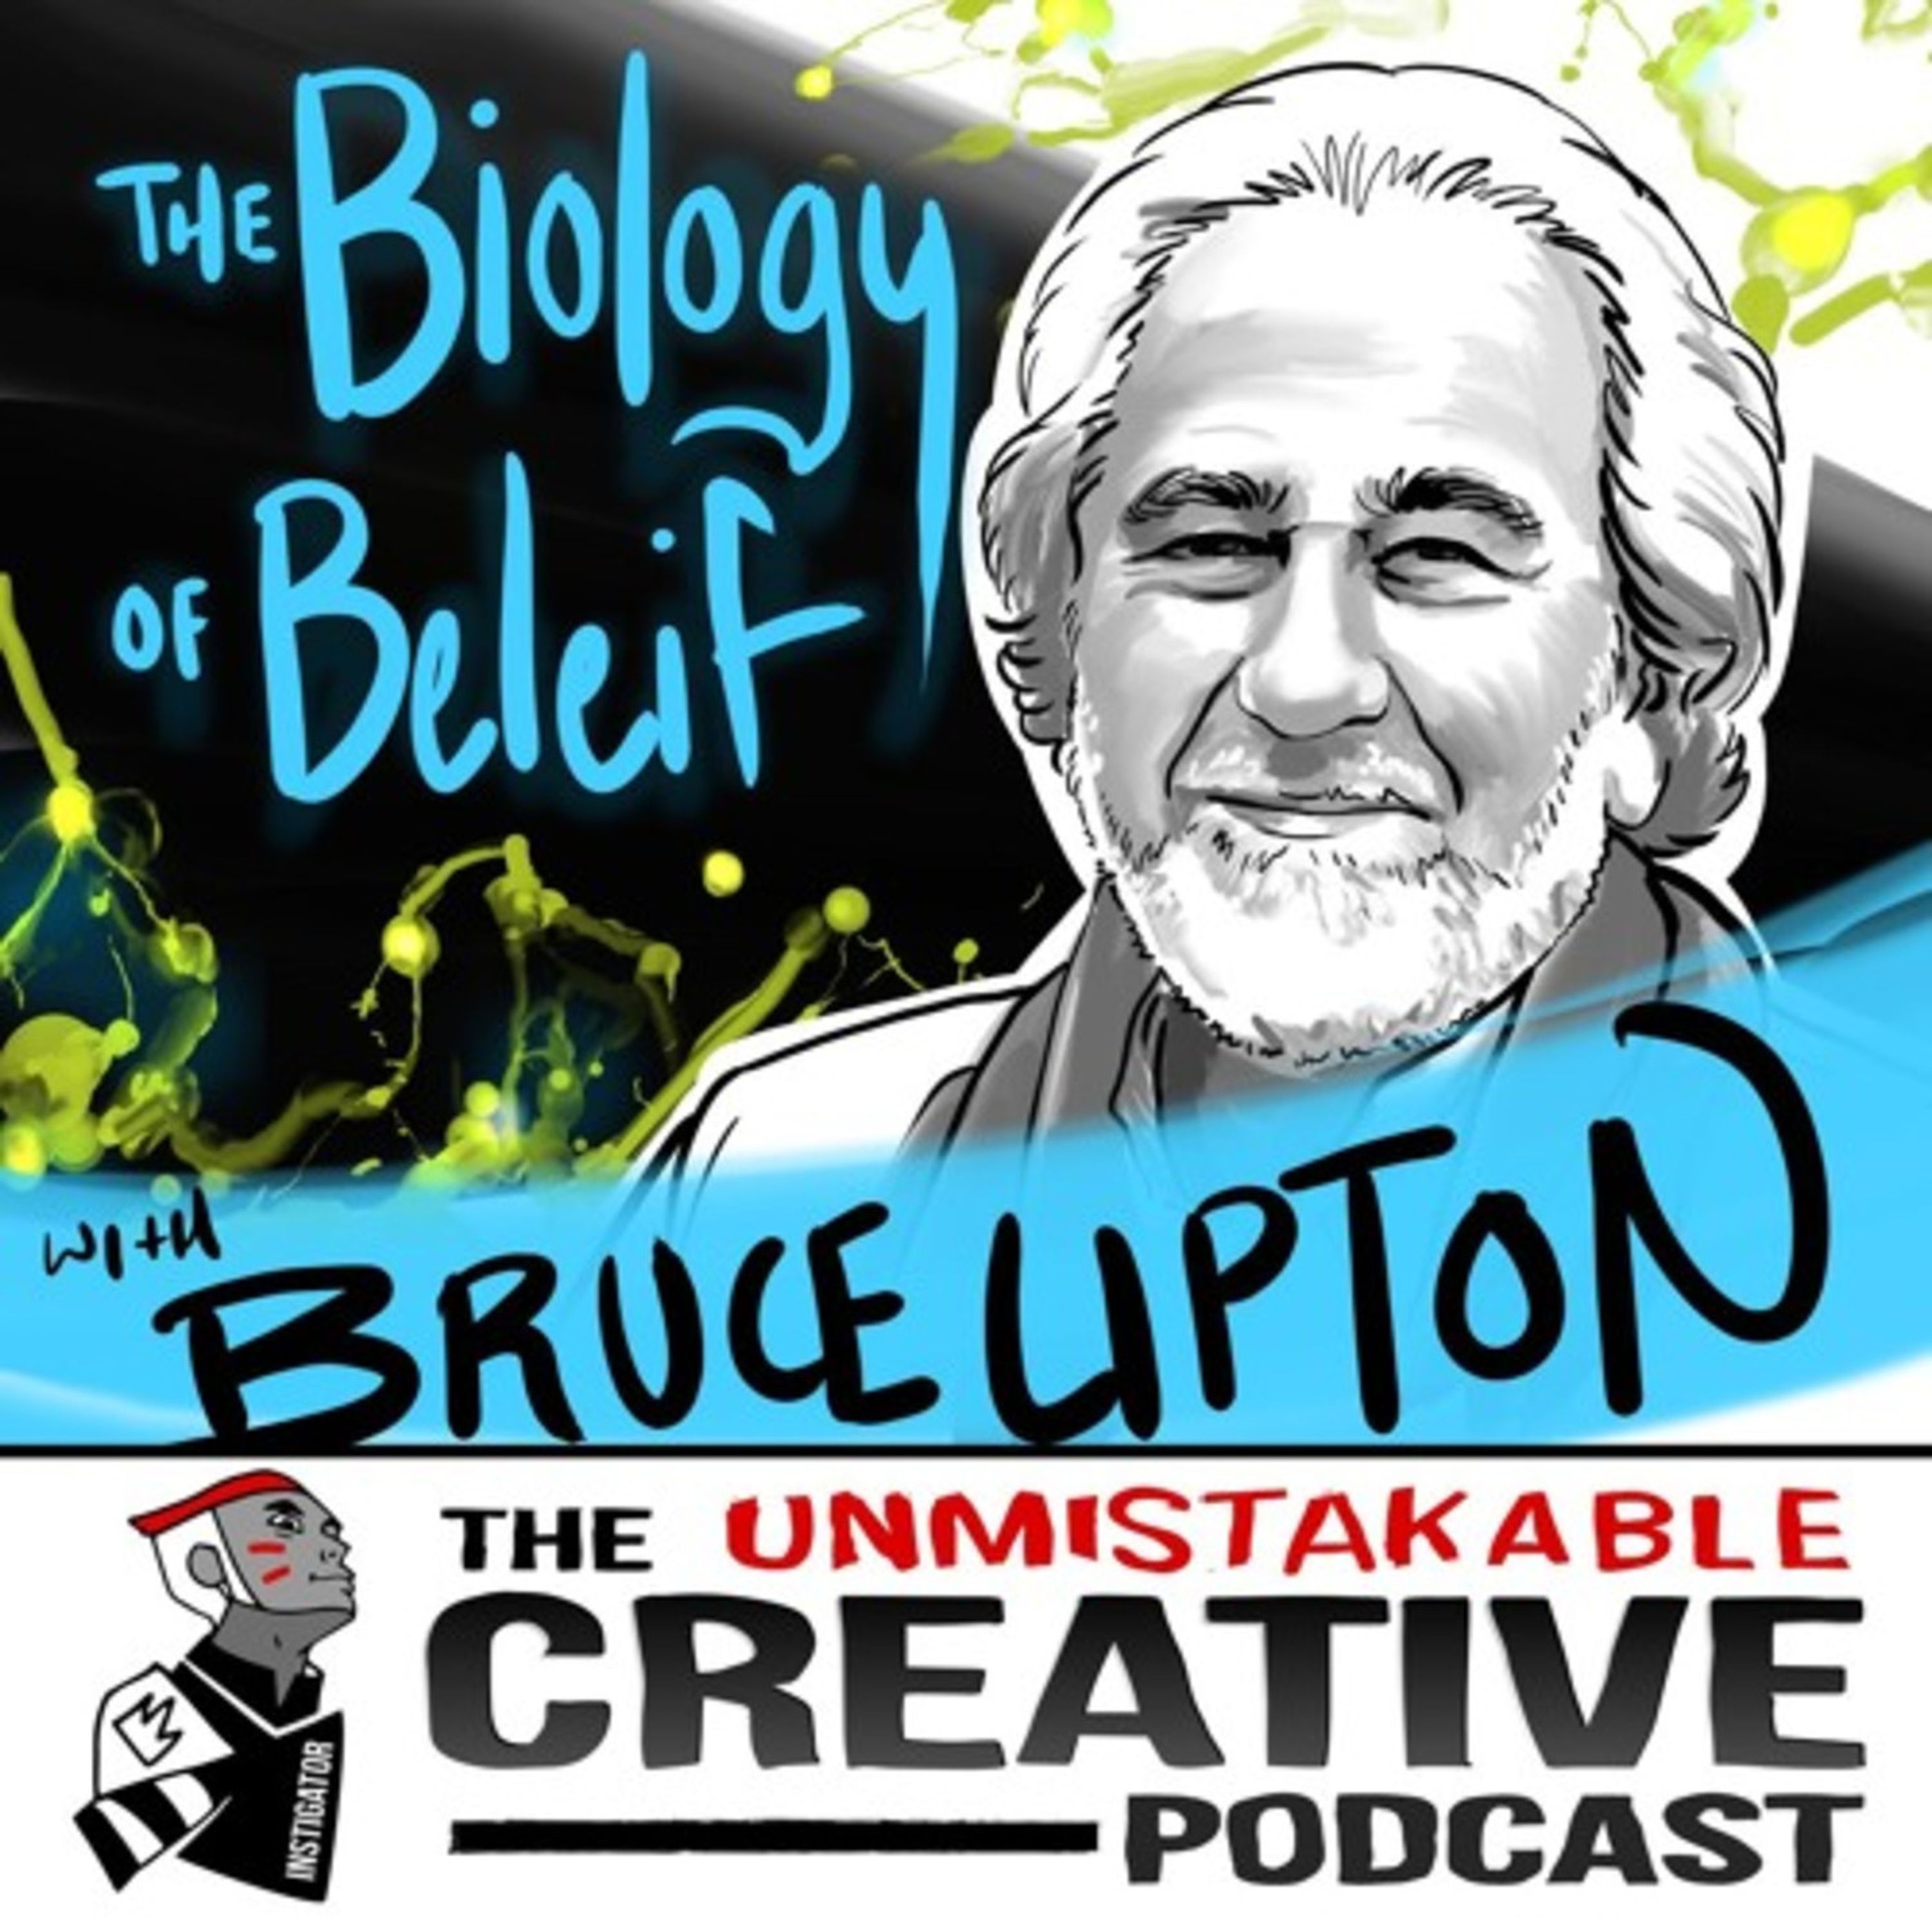 Bruce Lipton: The Biology of Belief